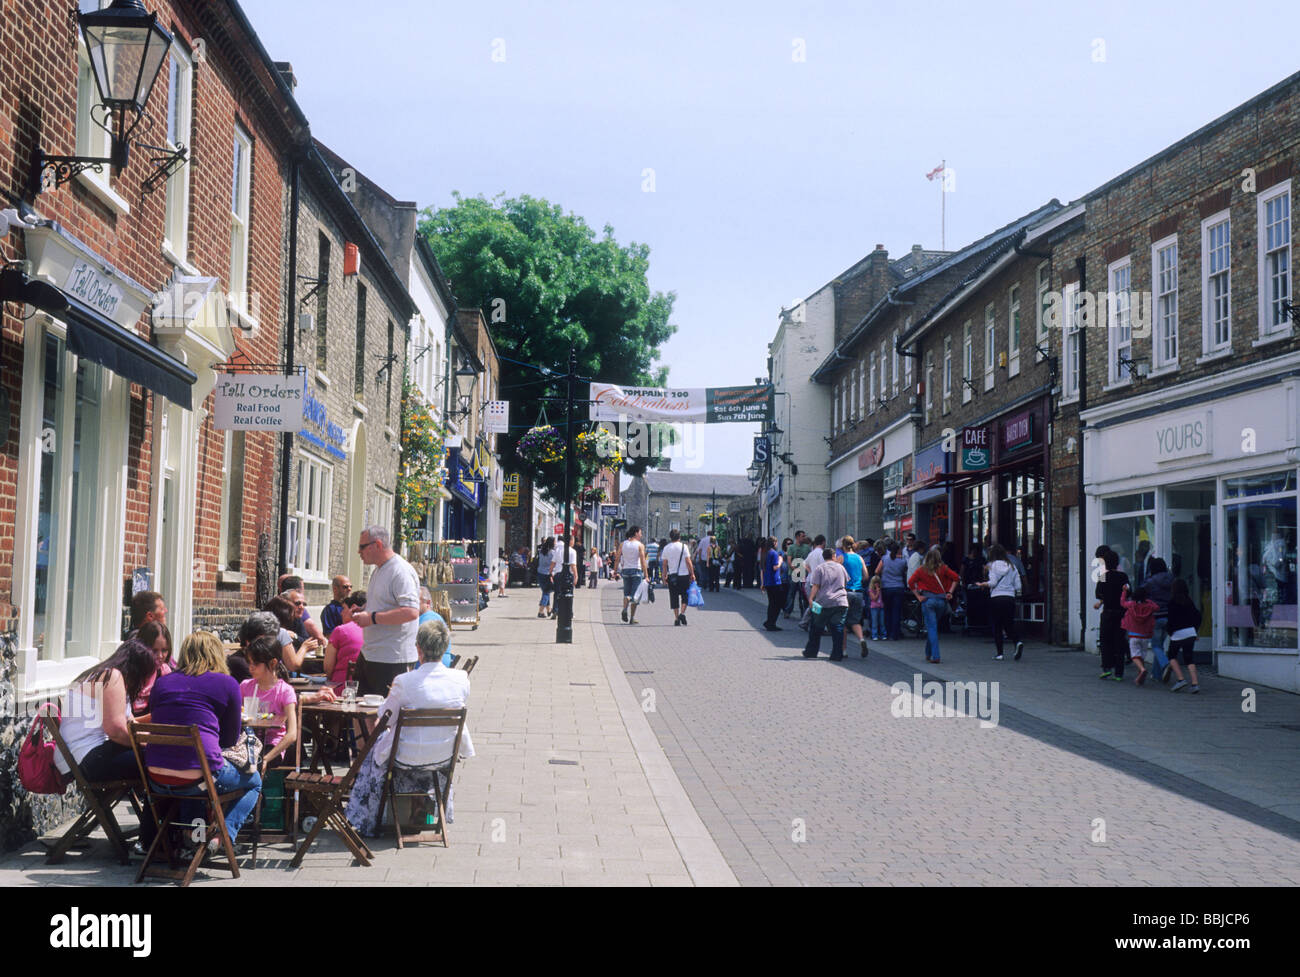 https://c8.alamy.com/comp/BBJCP6/thetford-town-centre-pedestrian-shopping-precinct-street-cafe-people-BBJCP6.jpg